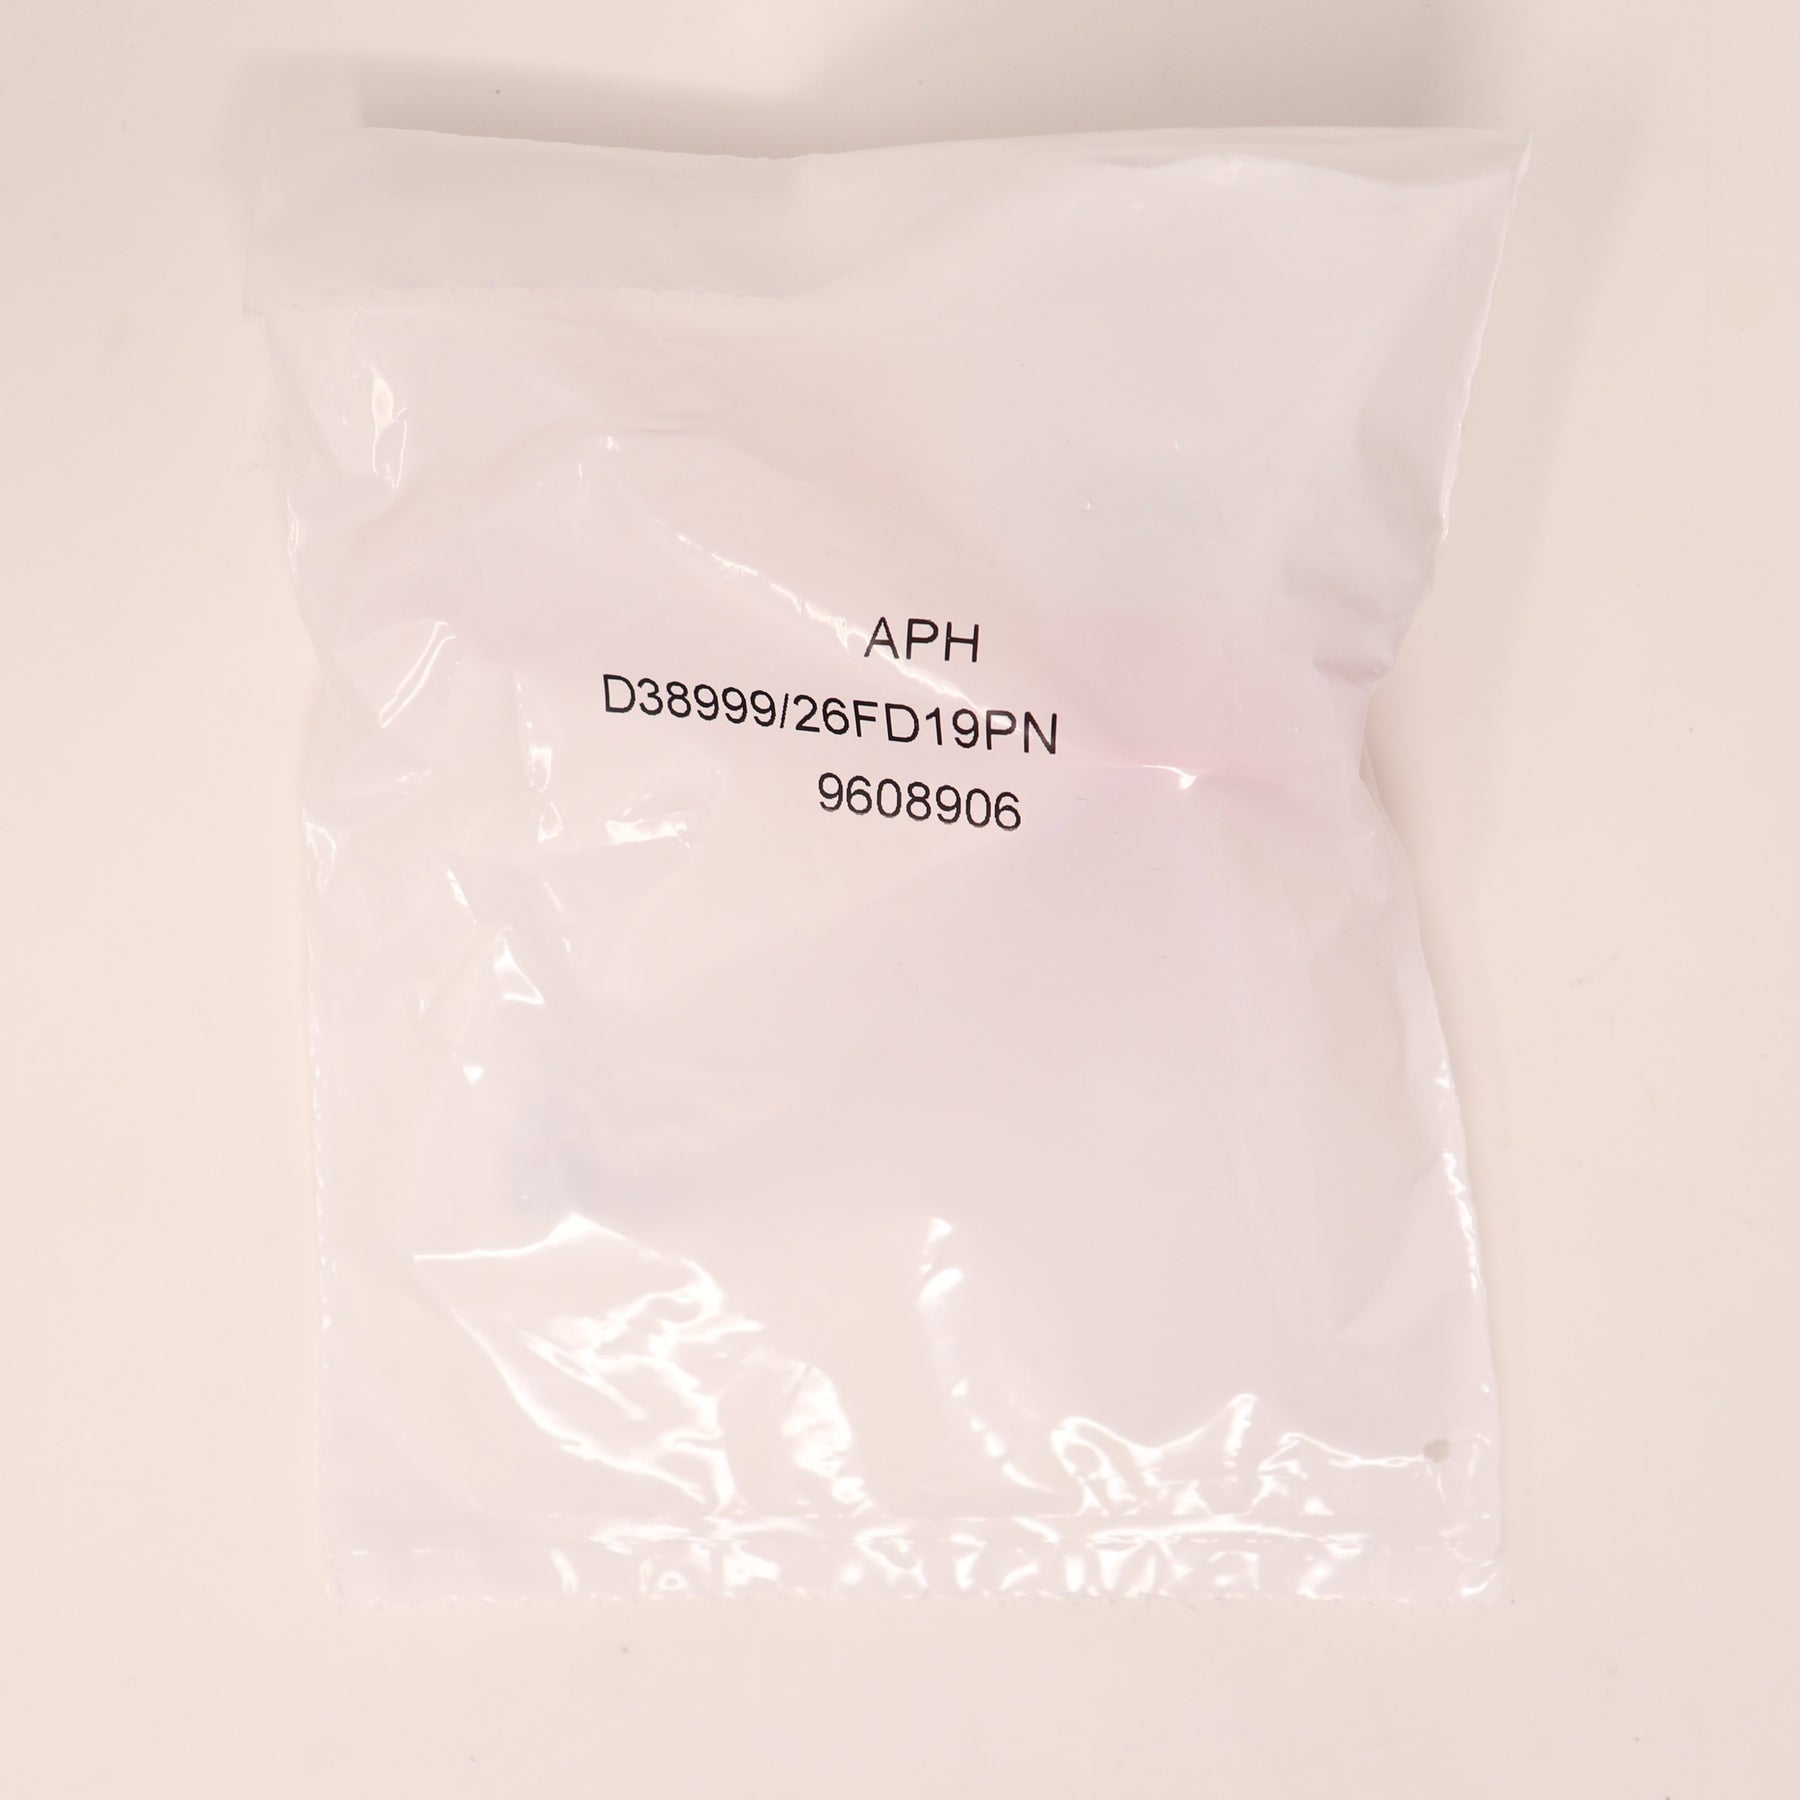 Amphenol Circular MIL Spec Connector D38999/26FD19PN